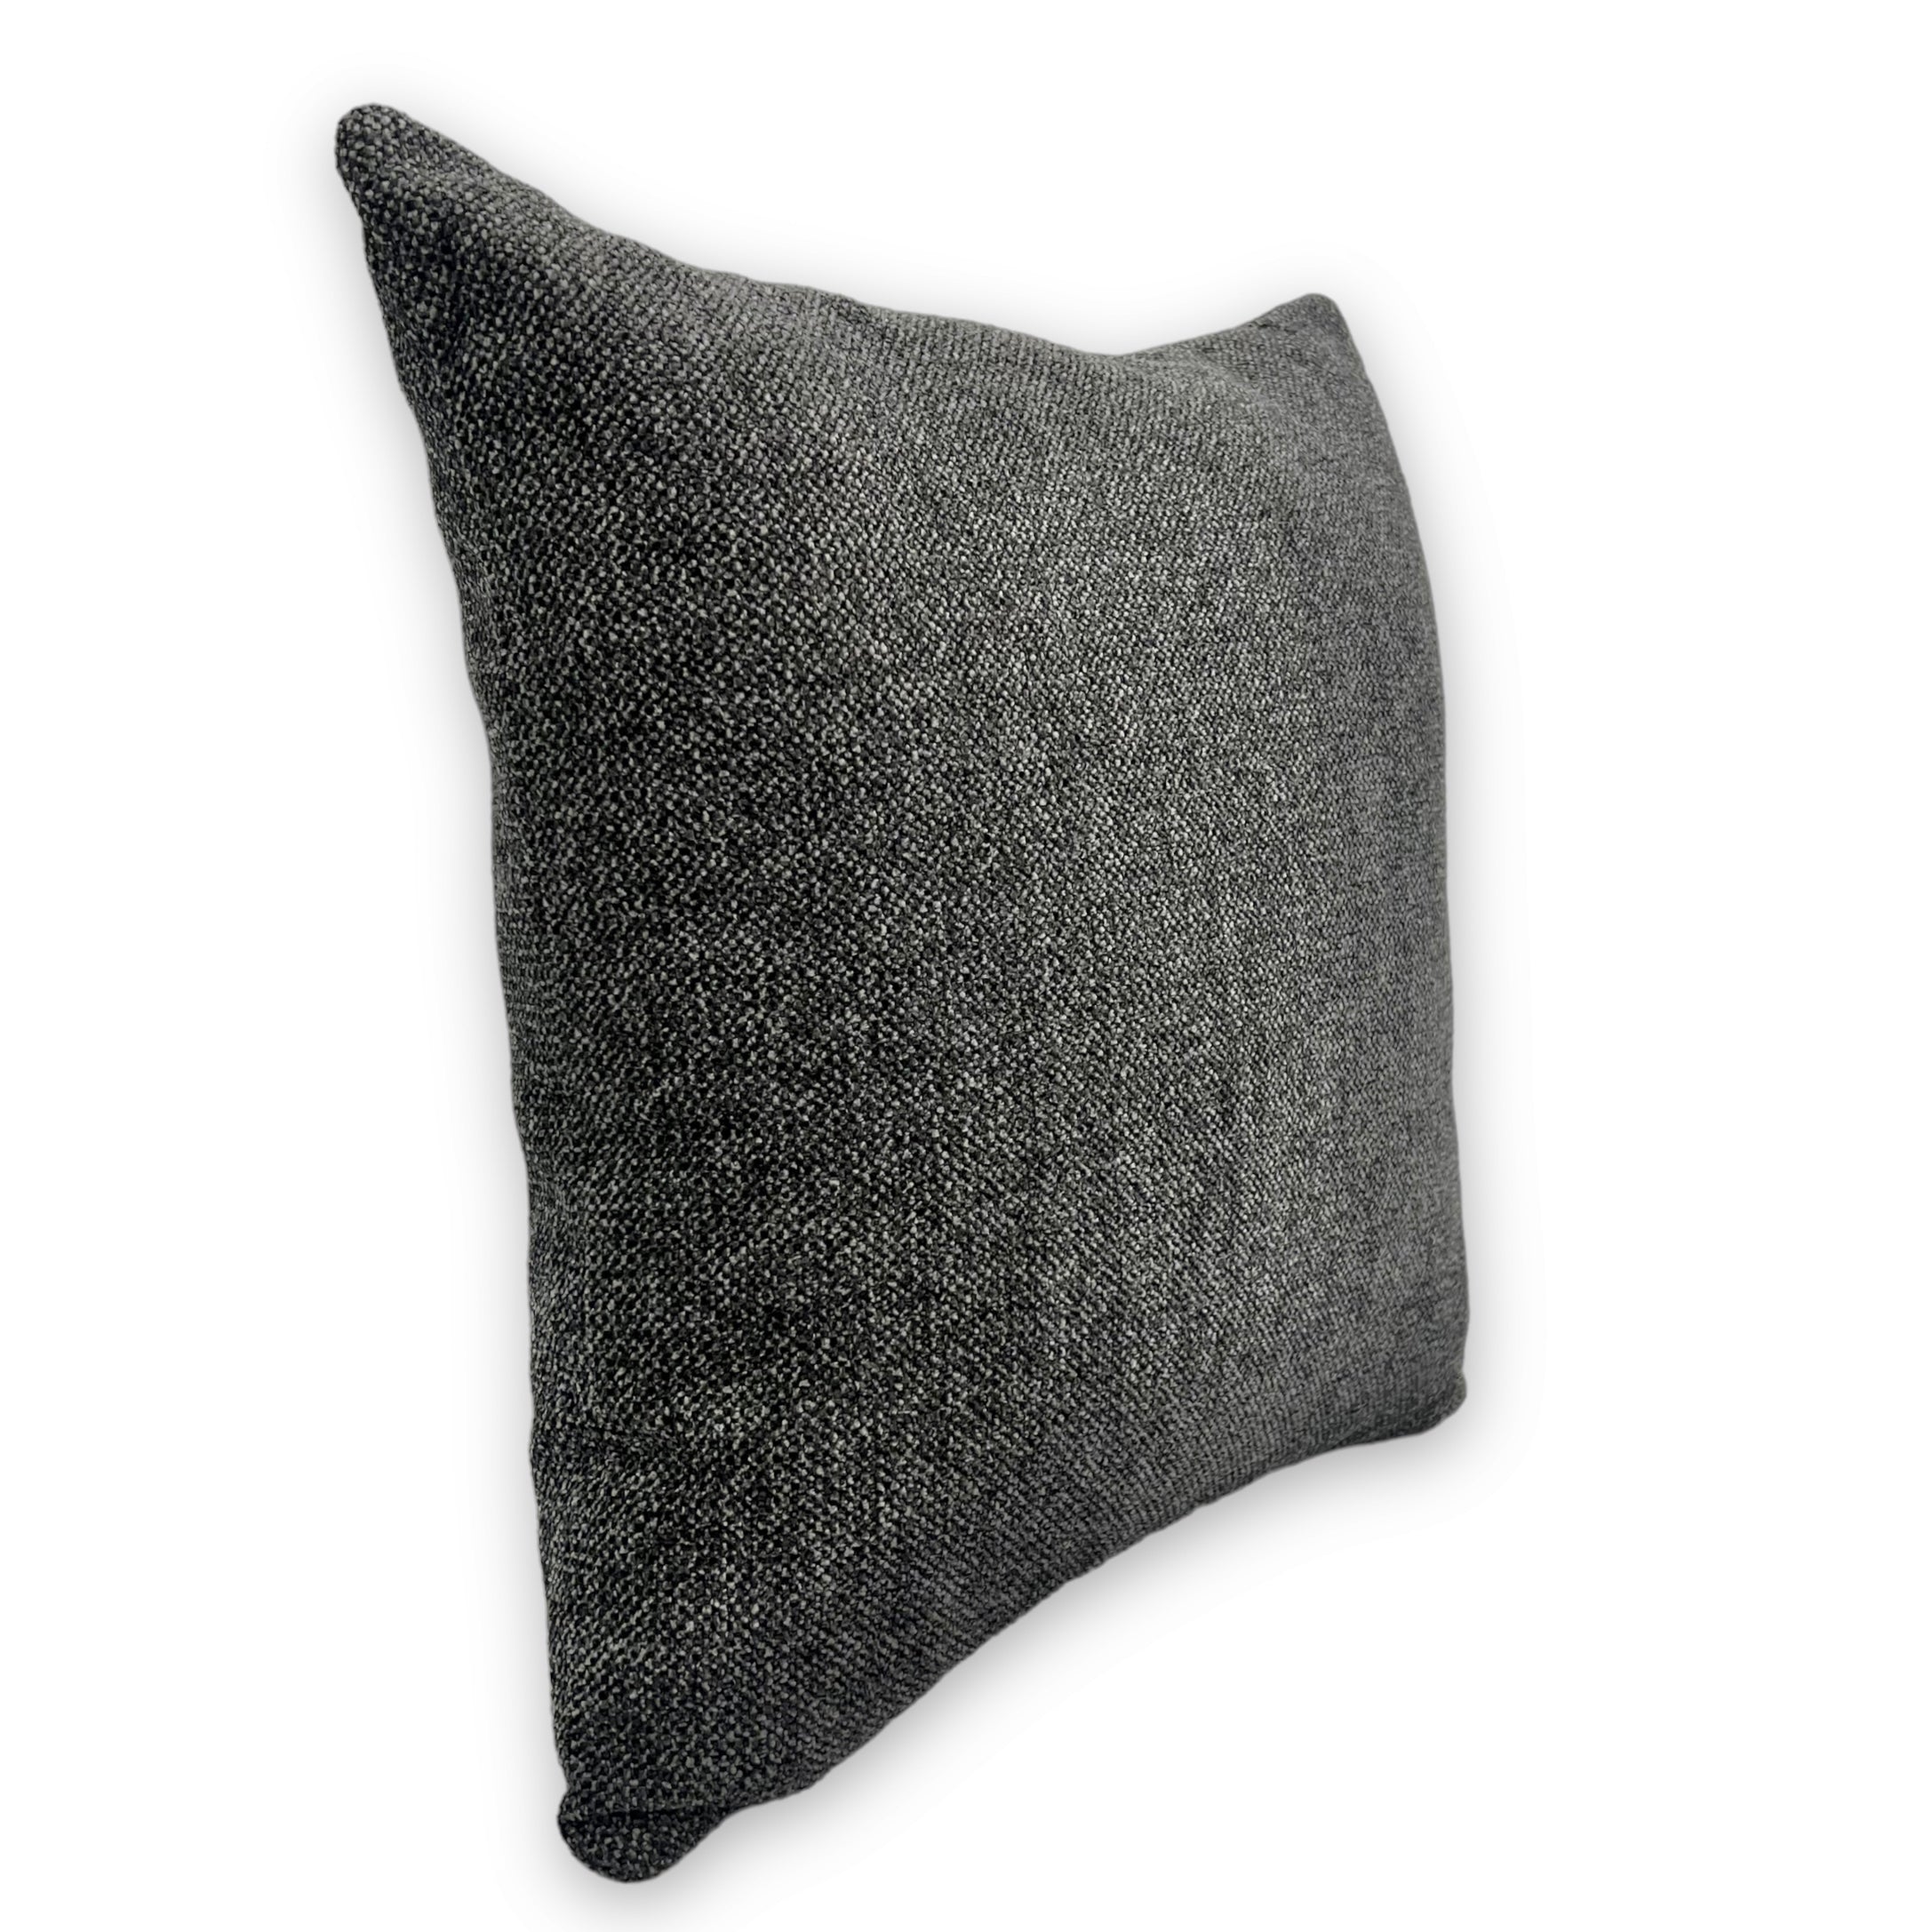 Anthracite Square Pillow